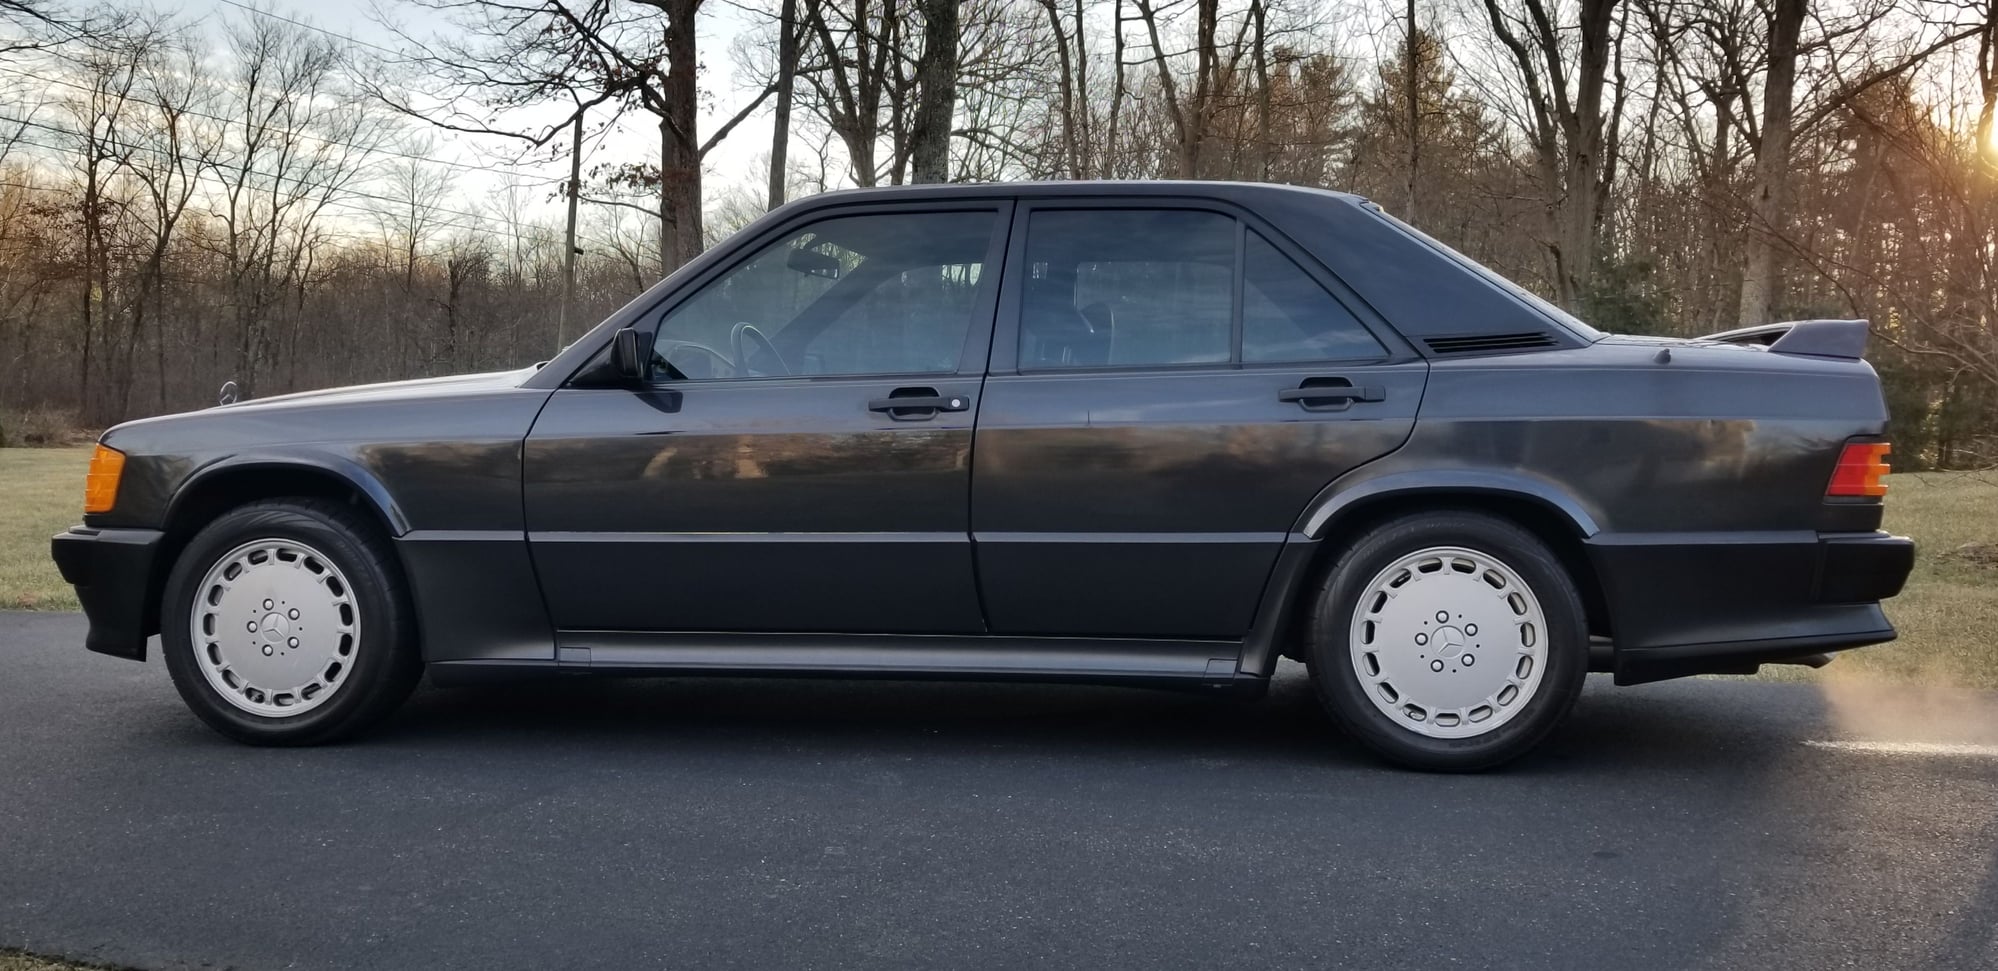 1987 Mercedes-Benz 190E - 1987 190e Cosworth 2.3 - Used - VIN WDBDA34D5HF385673 - 57,501 Miles - 4 cyl - 2WD - Manual - Sedan - Black - Sandy Hook, CT 06482, United States